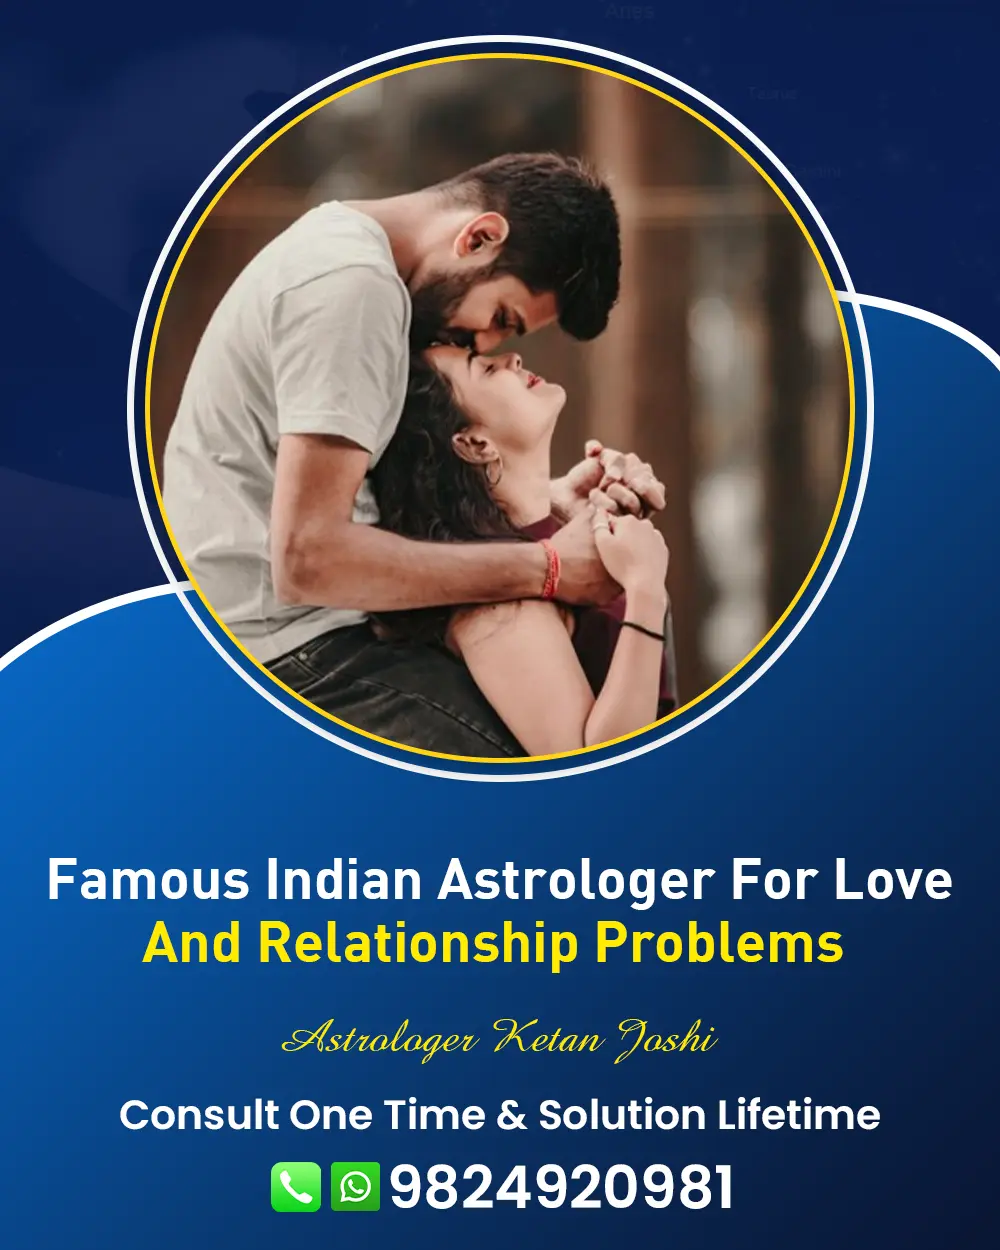 Best Astrologer In Bhuj